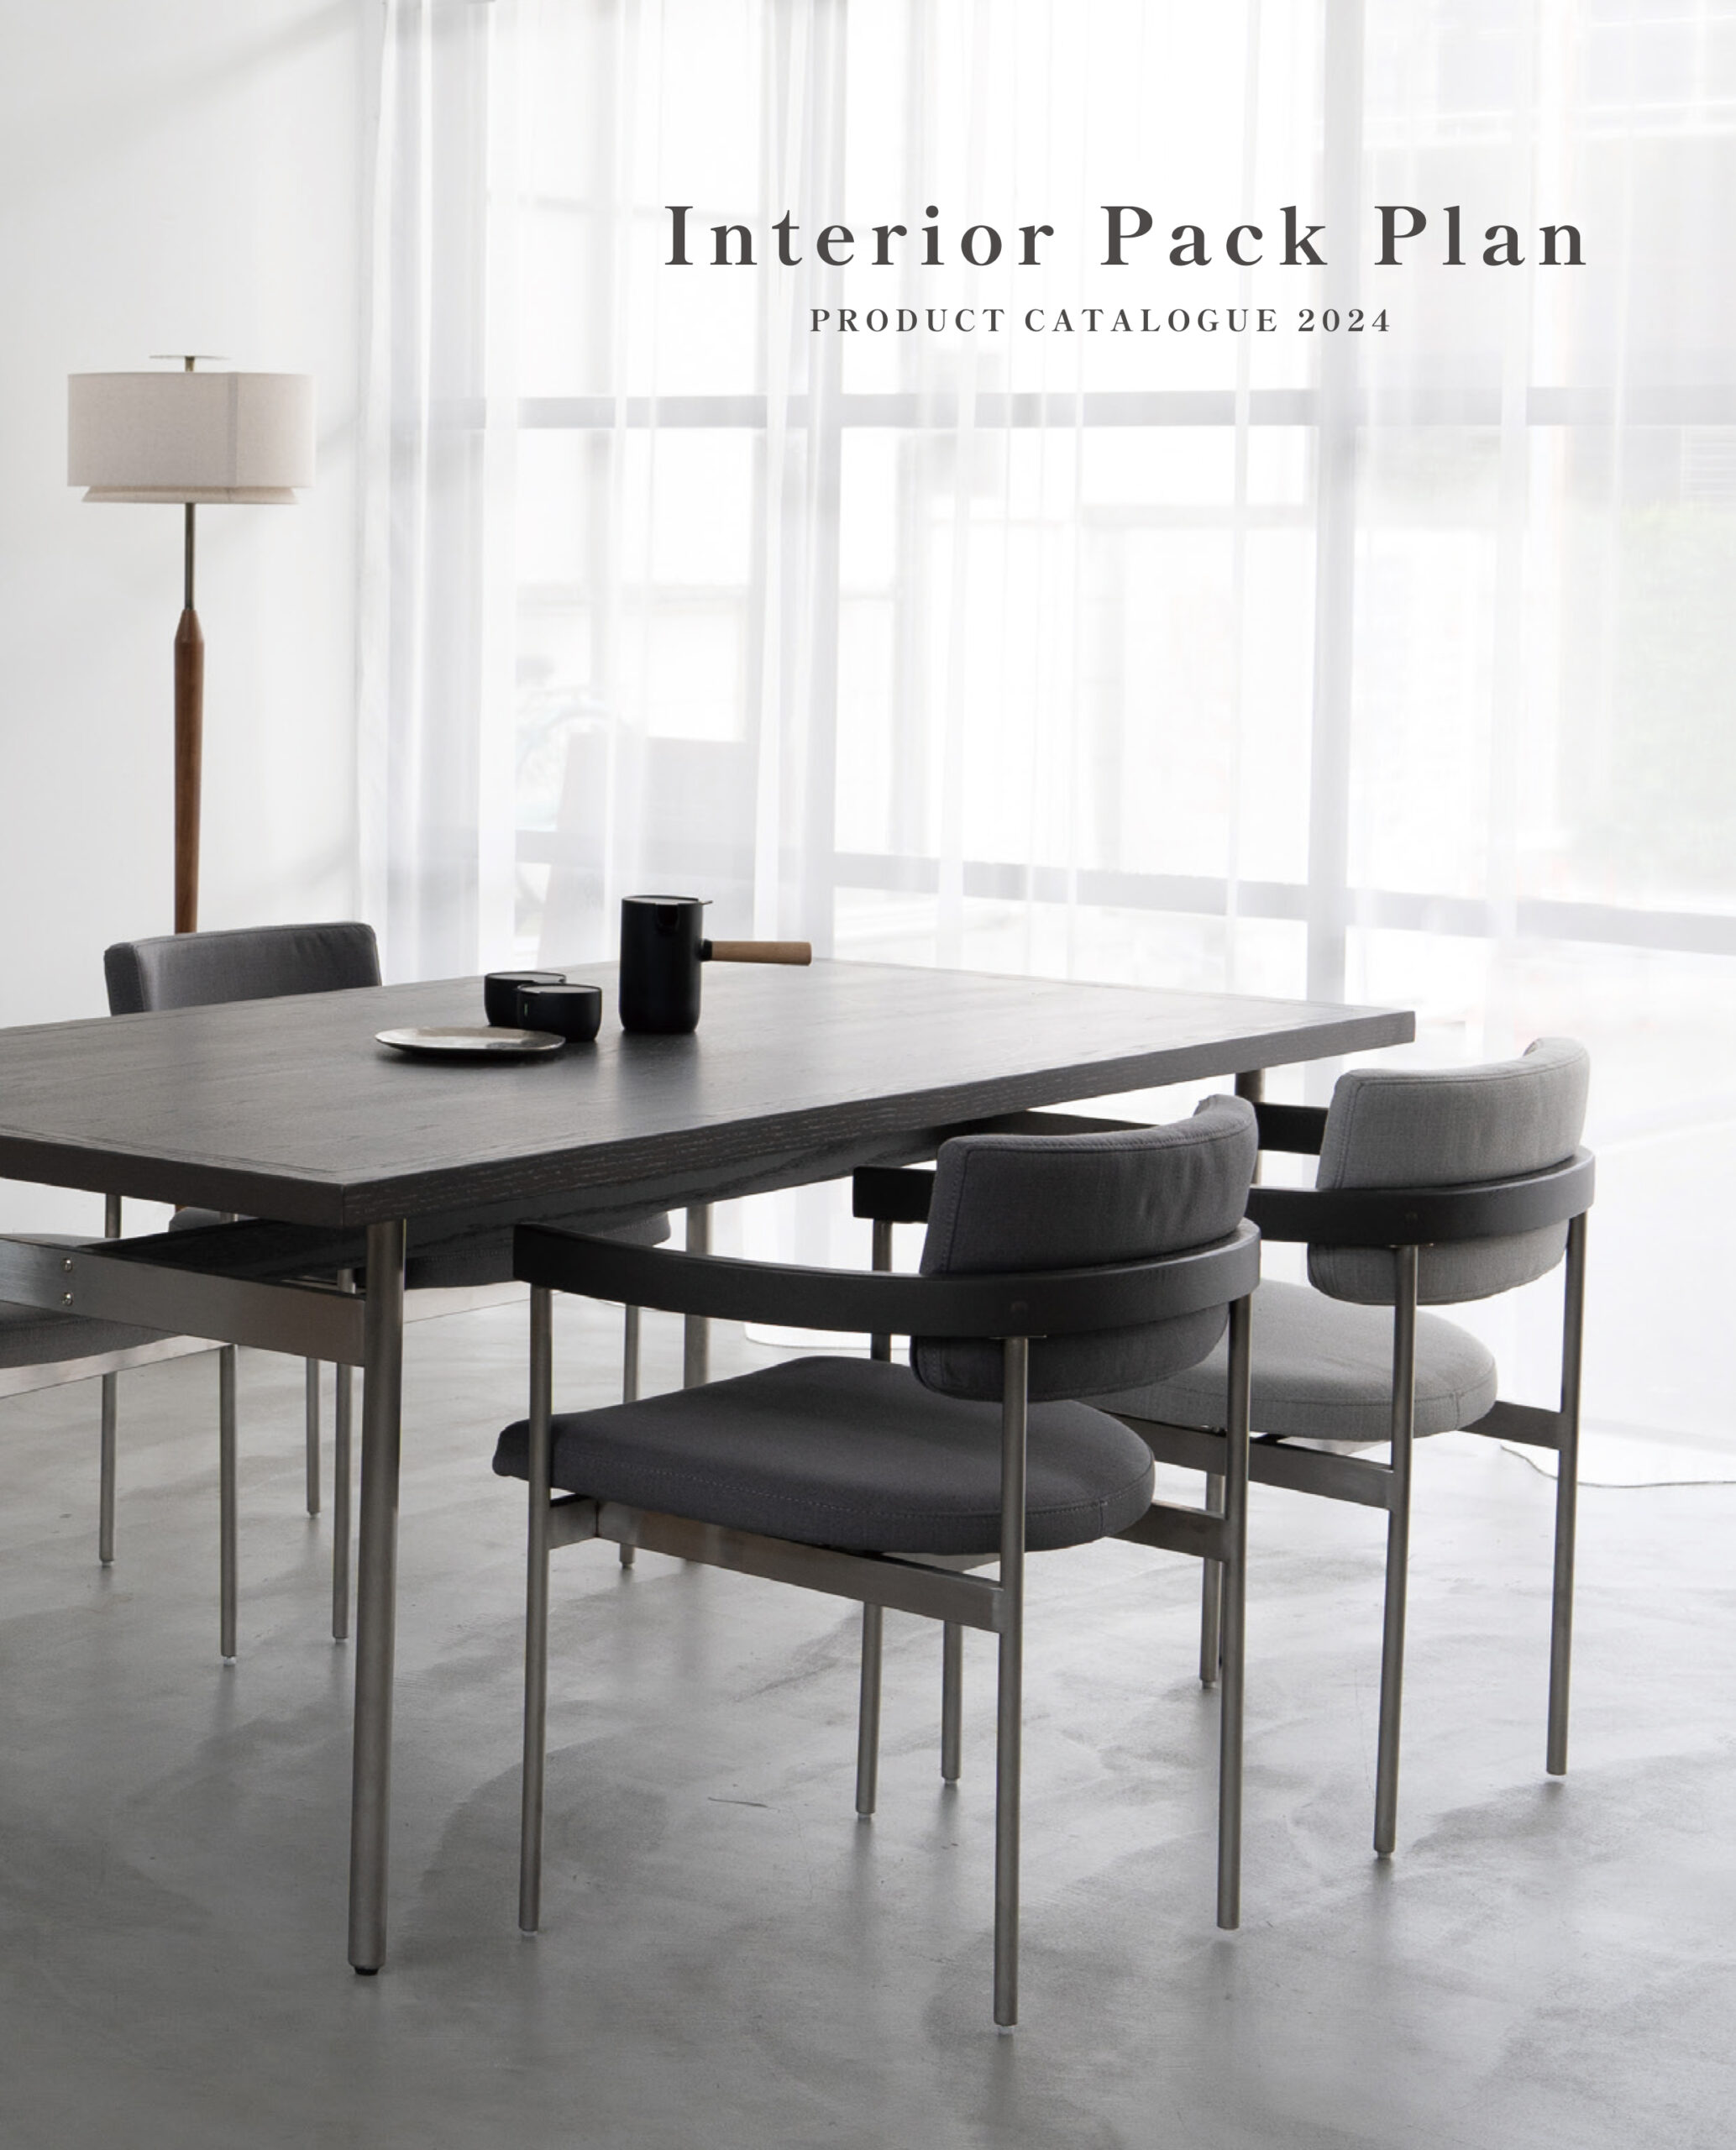 Interior Pack Plan 2024